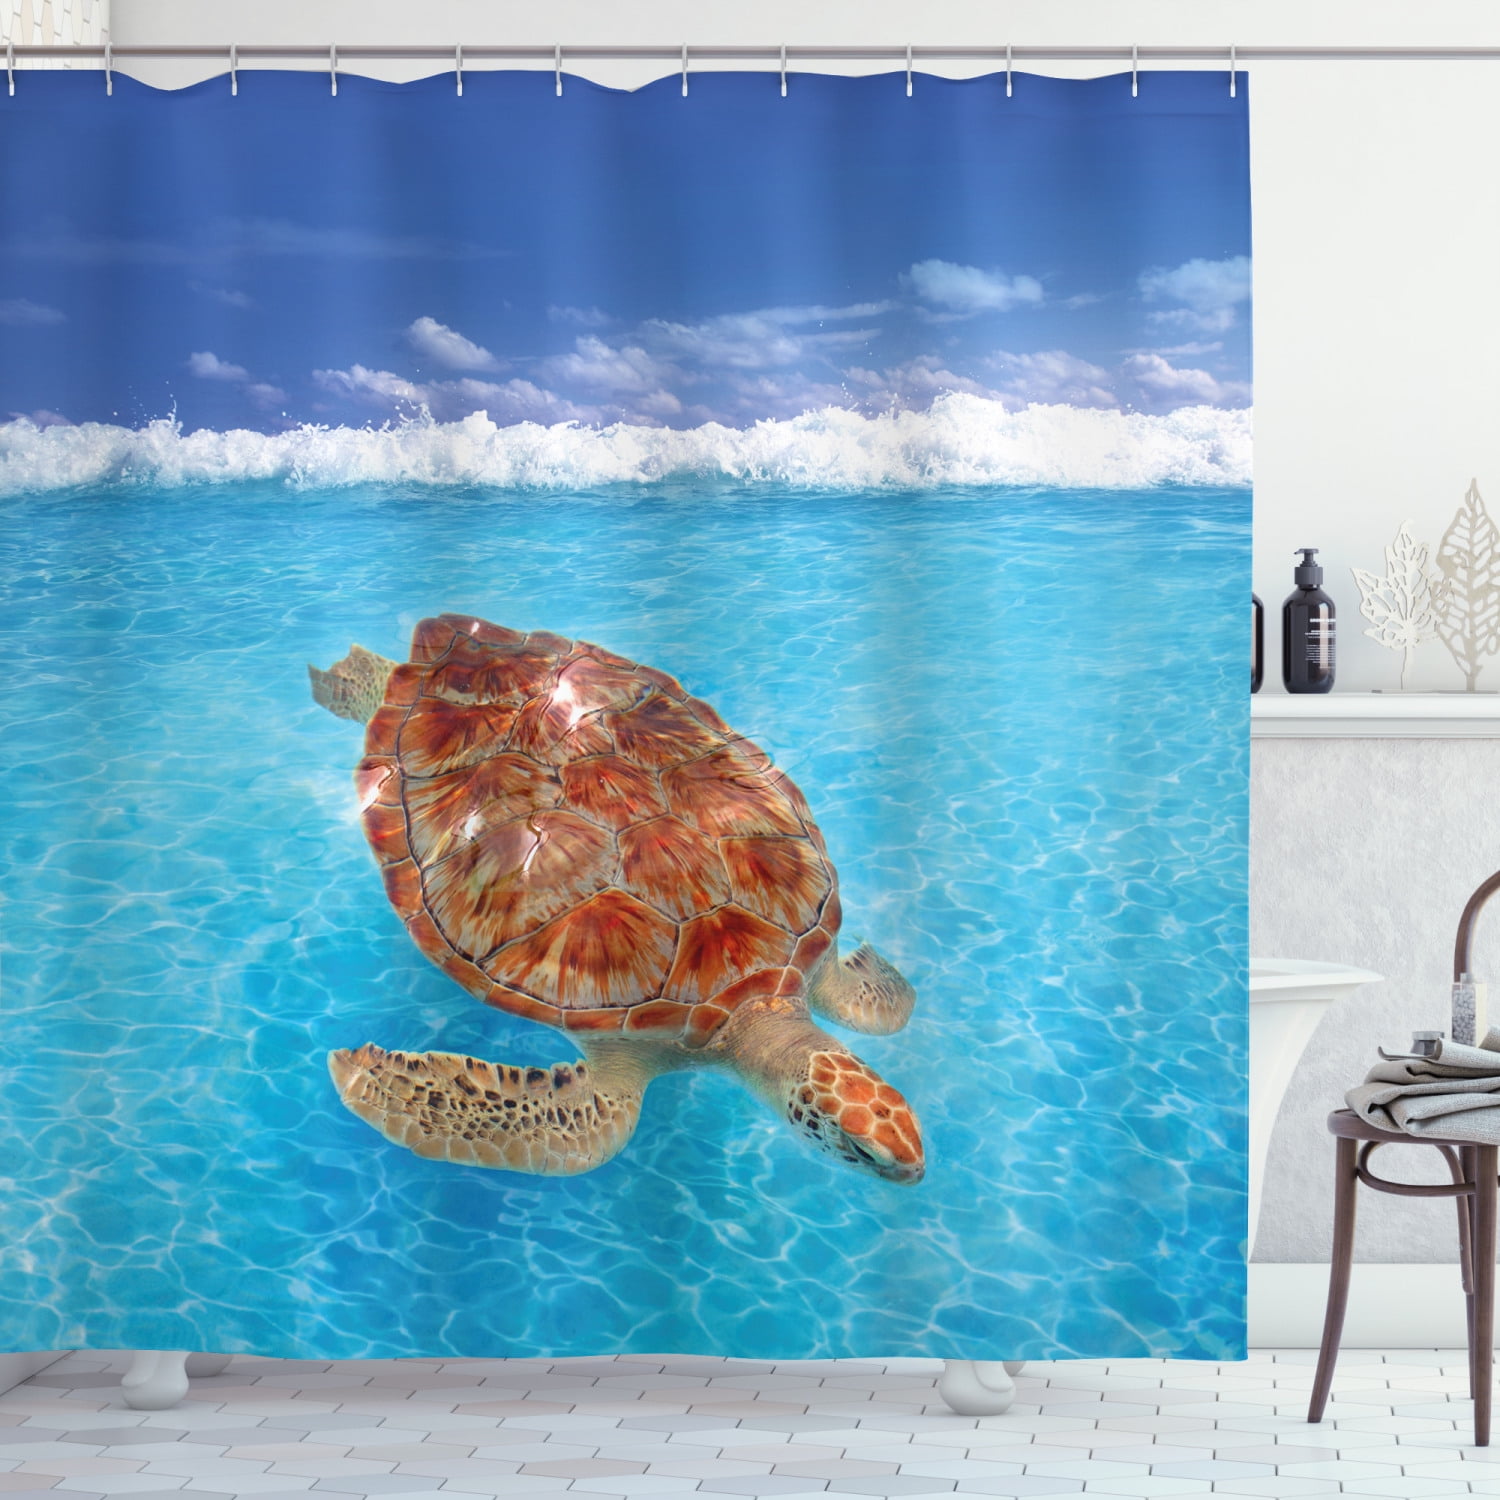 Wheel and Sea Turtle on Beach Shower Curtains Bathroom Waterproof Fabric & Hooks